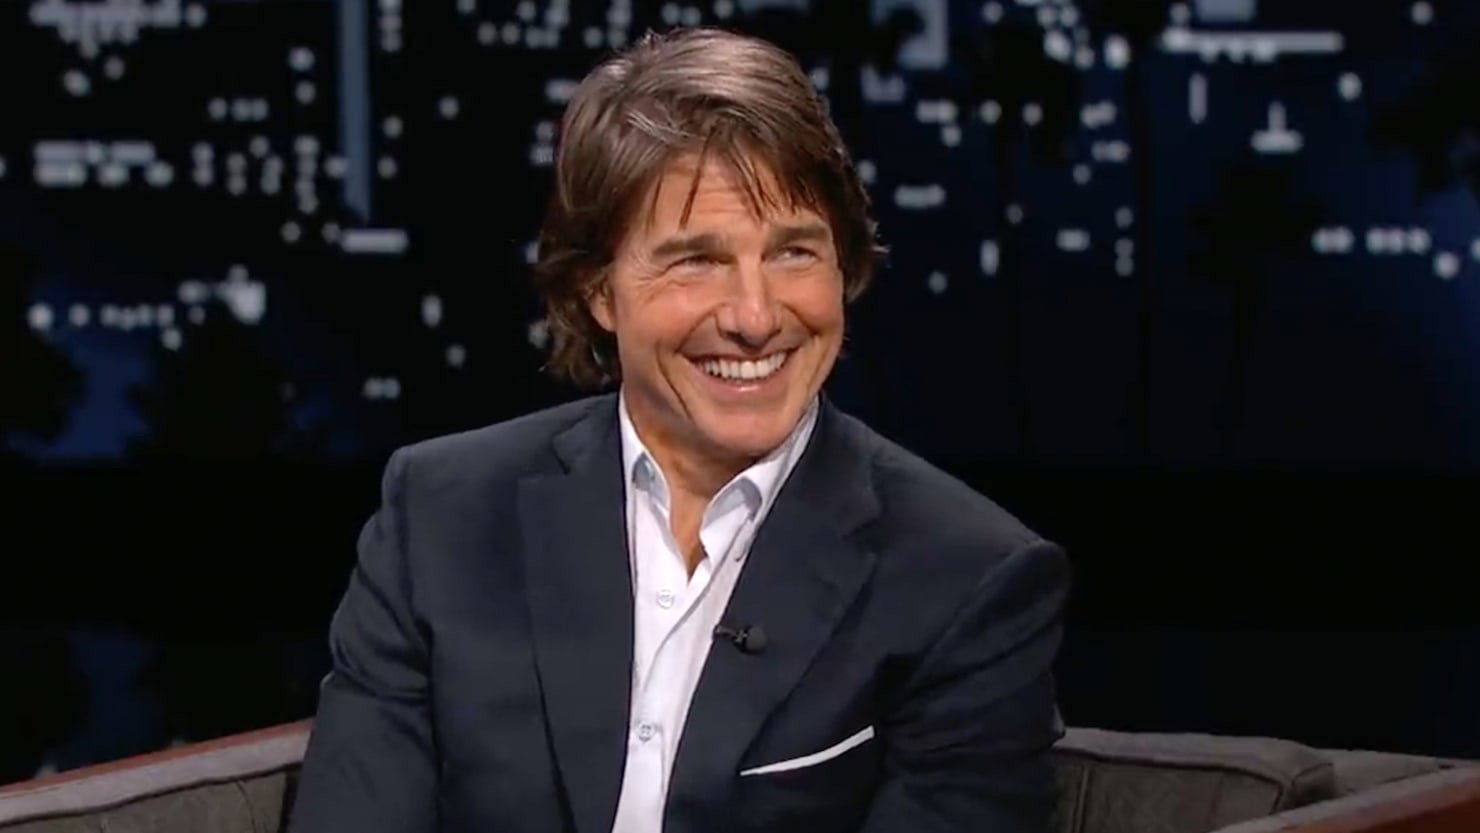 Tom Cruise on Jimmy Kimmel Live